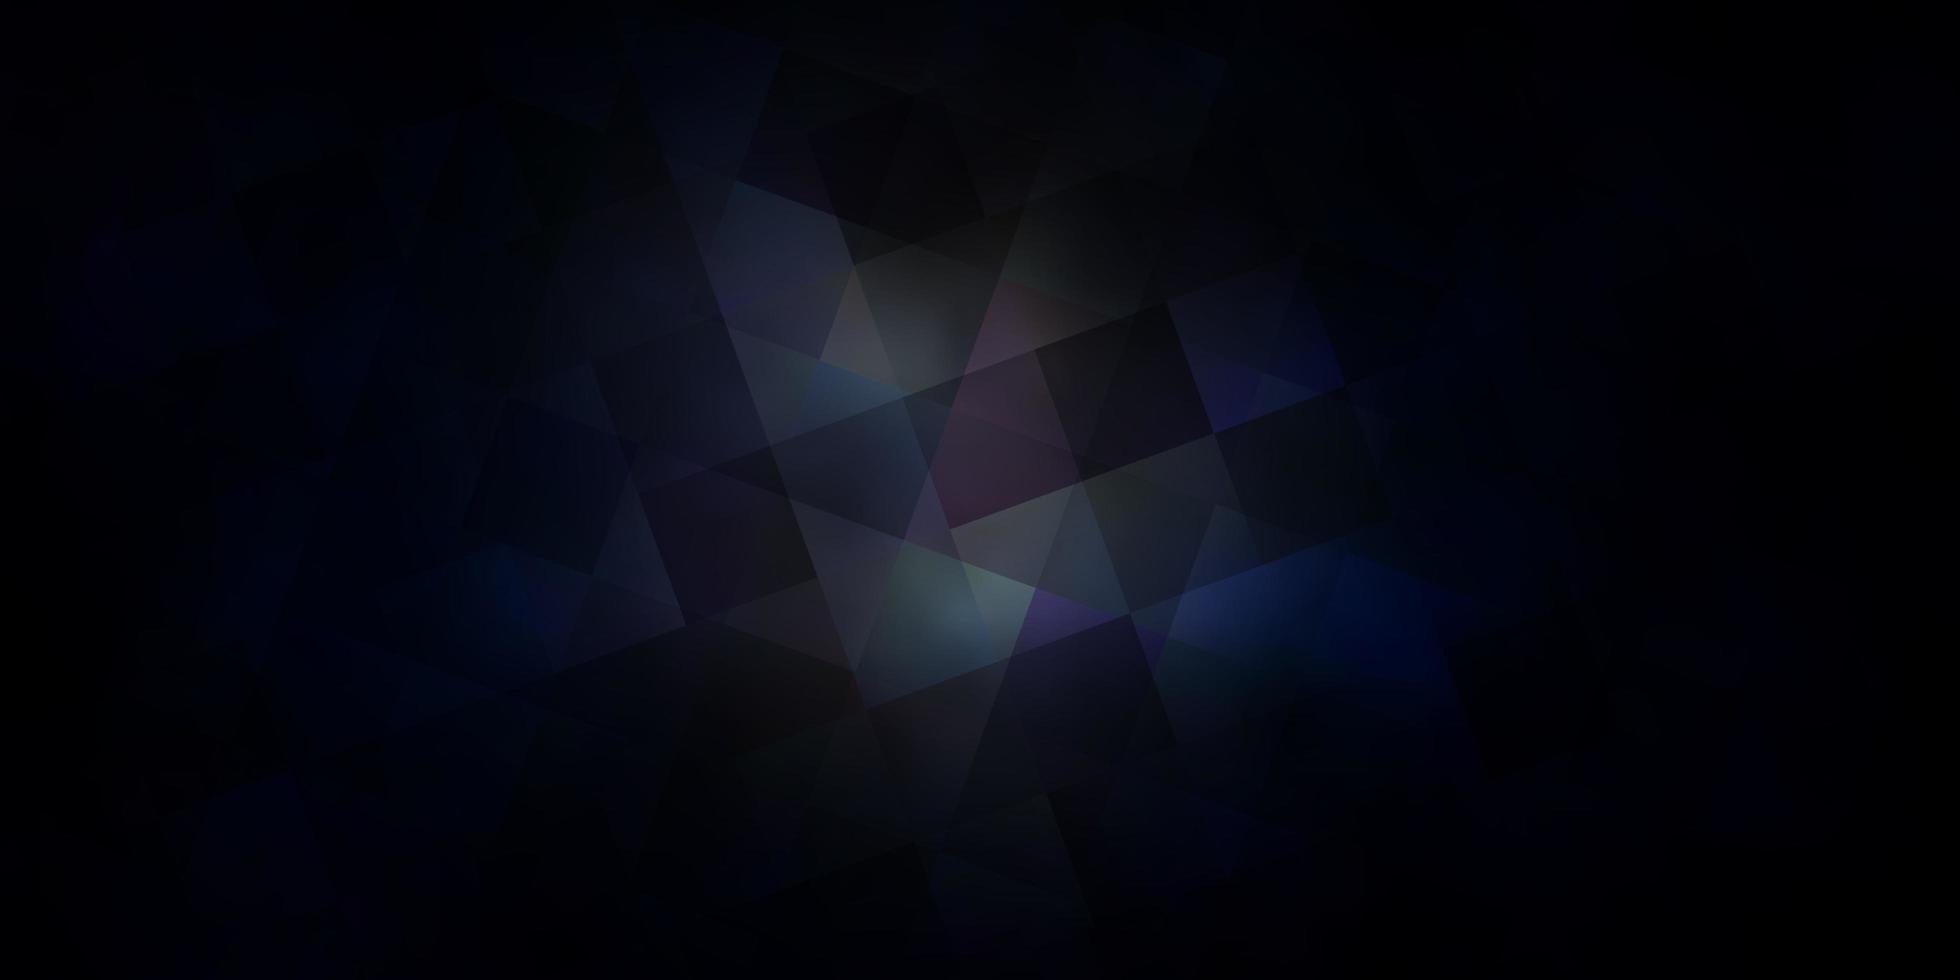 dunkelblaue Vektorschablone mit Kristallen, Quadraten. vektor